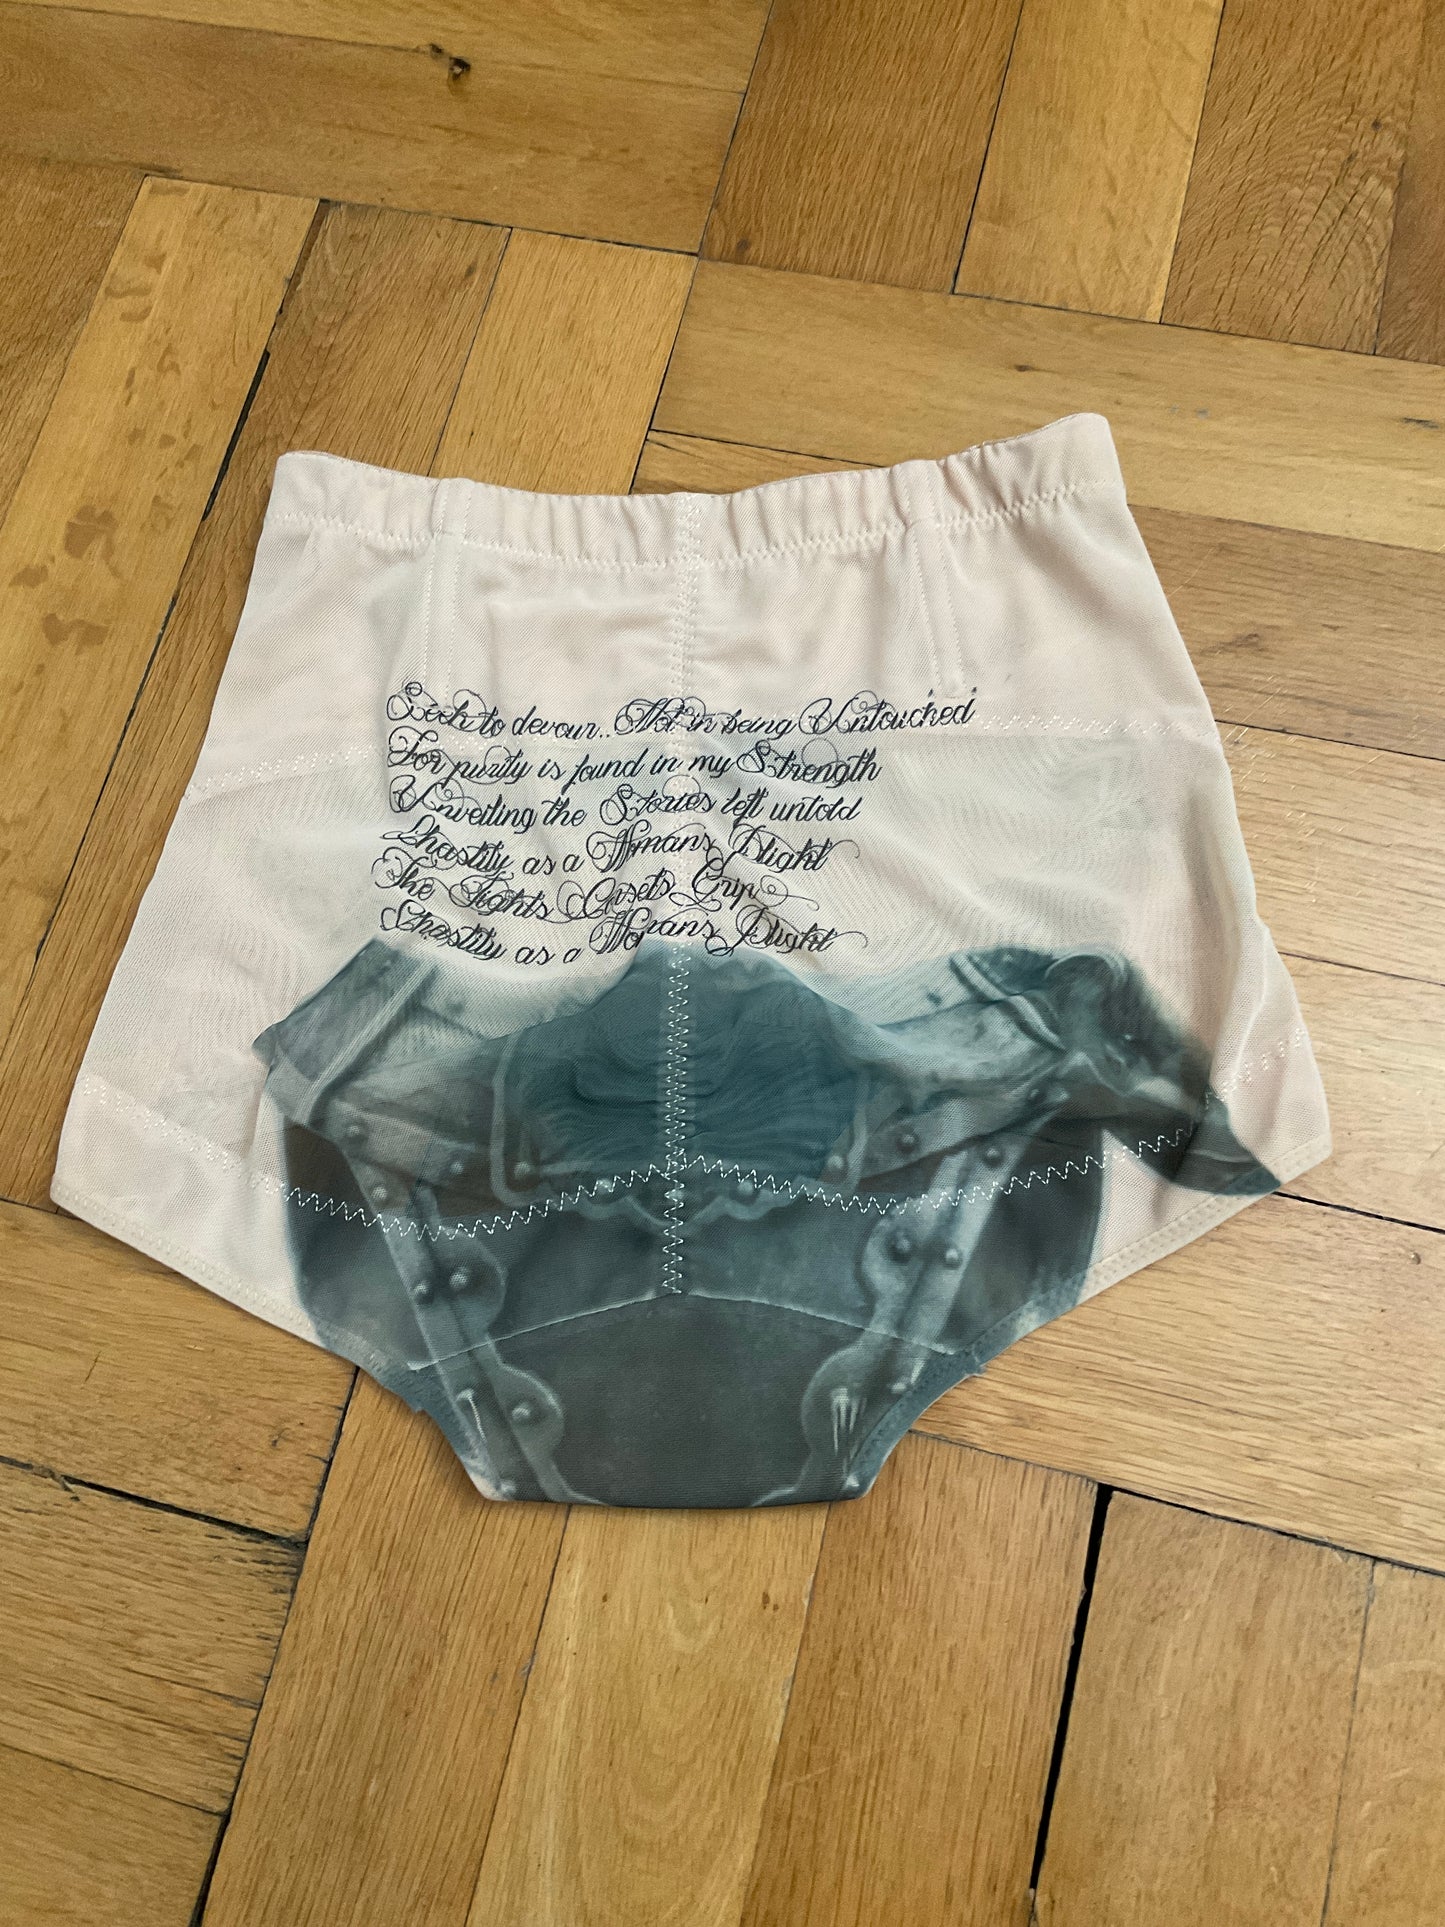 annina x ex-myszka chastity belt corset panty